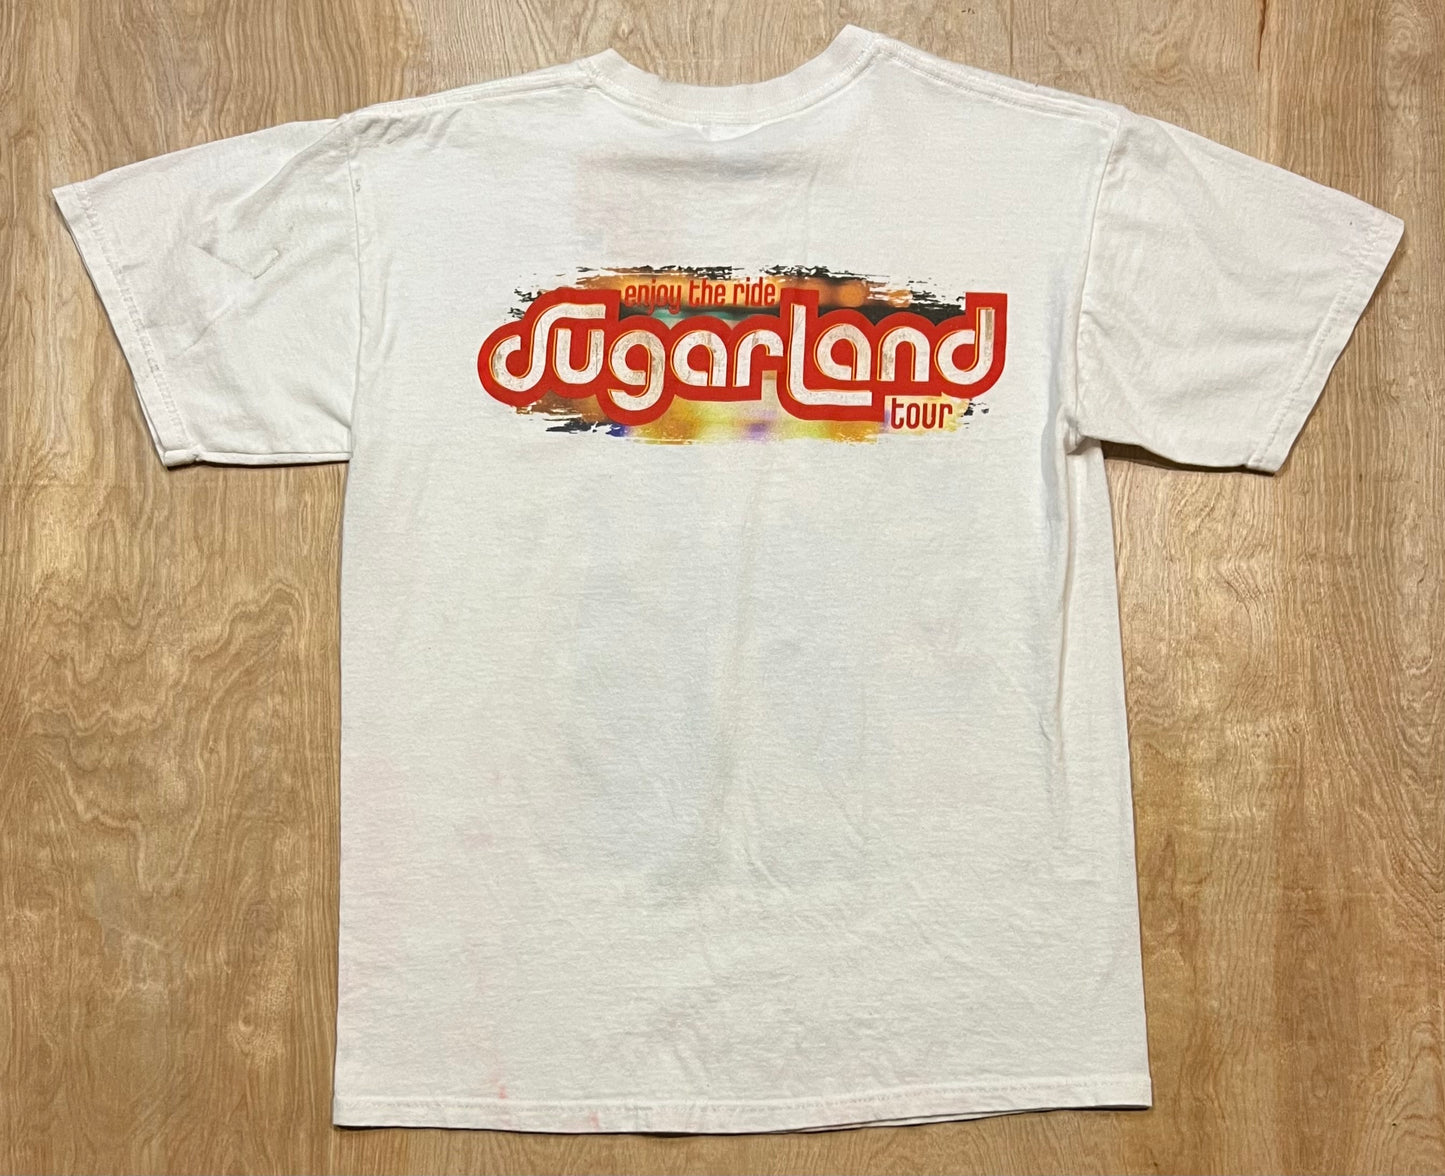 Sugarland "Enjoy The Ride" Tour T-Shirt